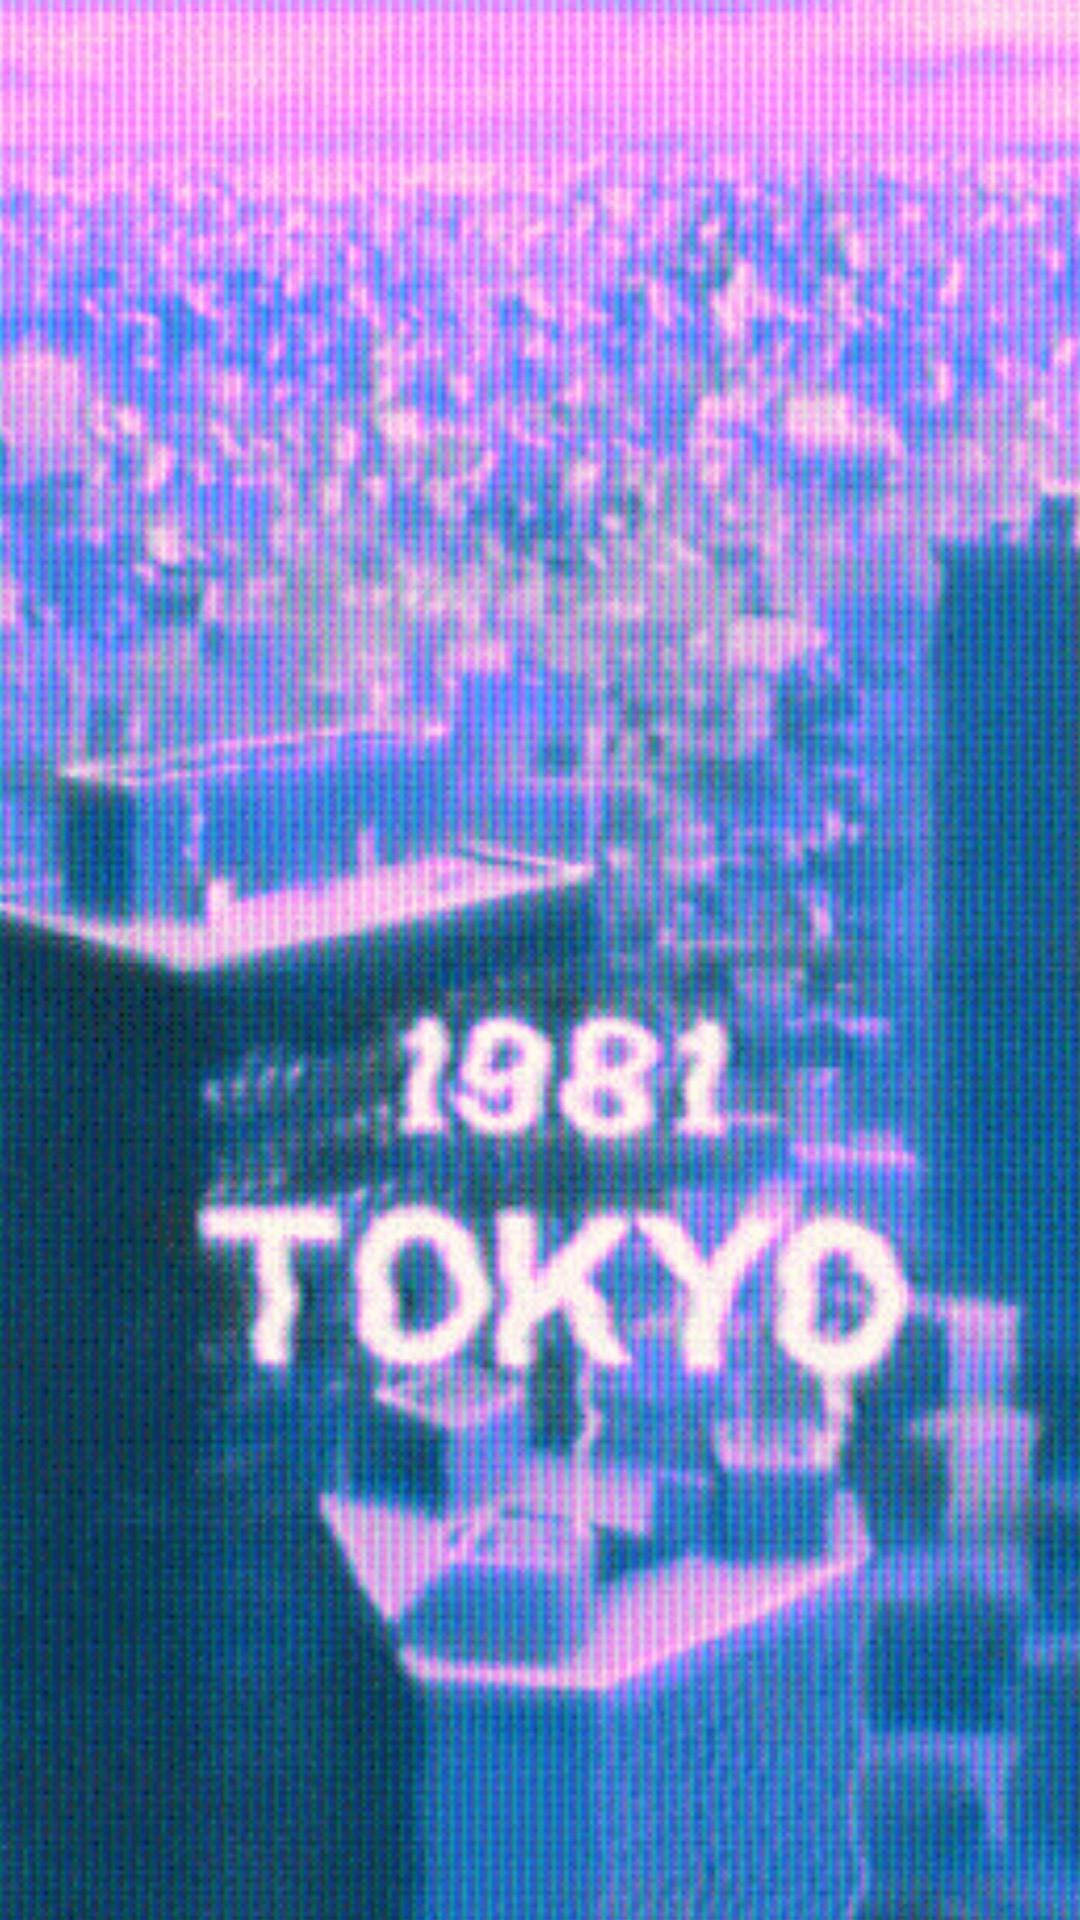 Aesthetic Pink Iphone 1981 Tokyo